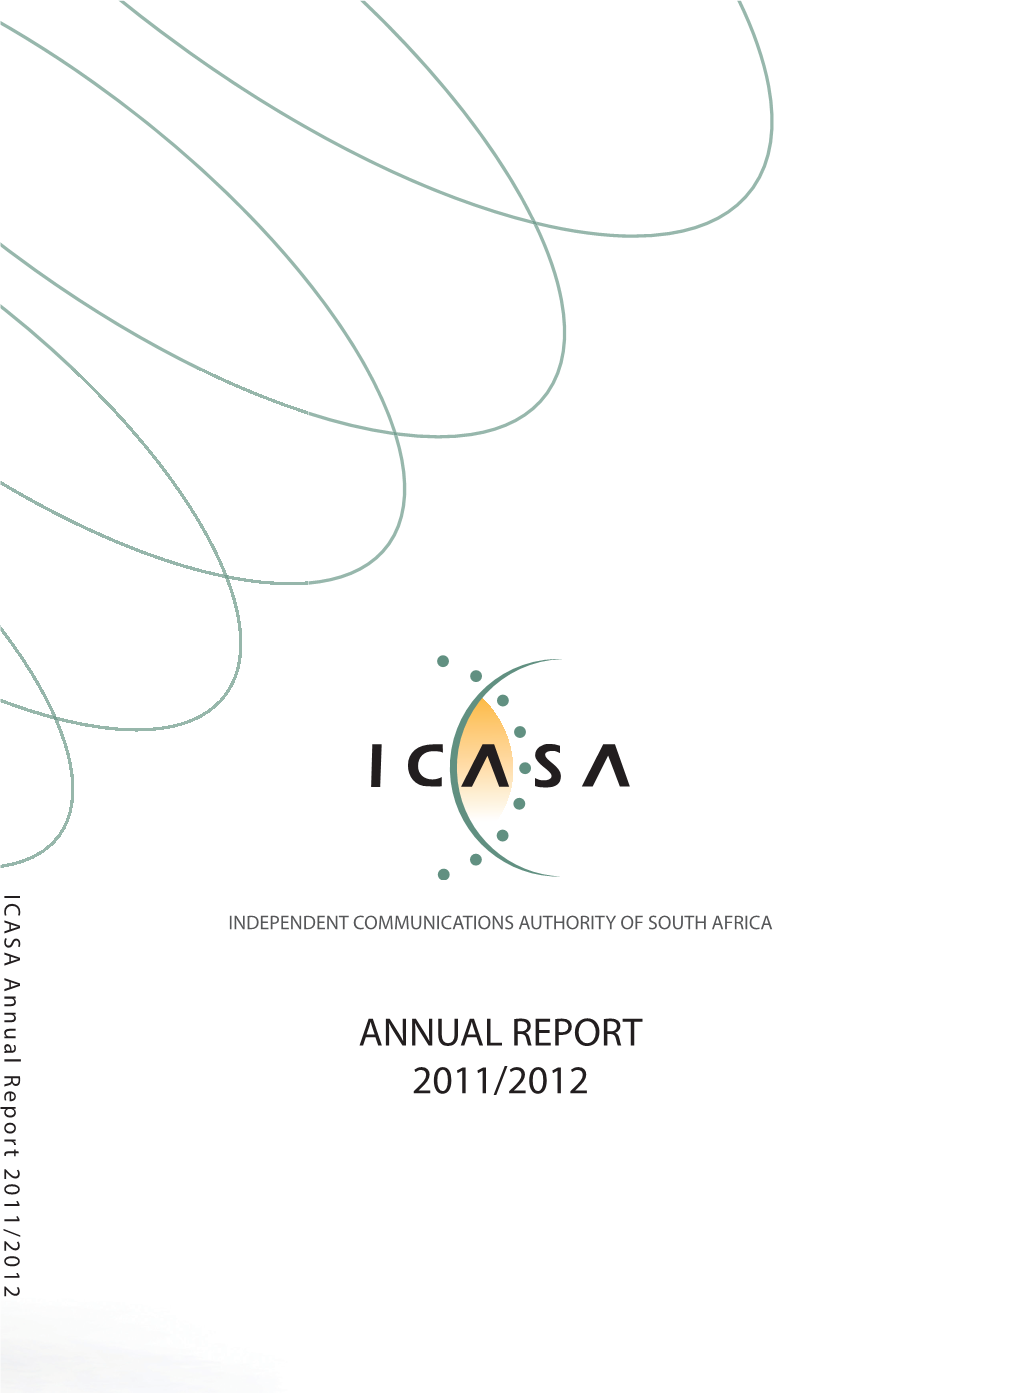 ICASA Front 14 Sept.Indd